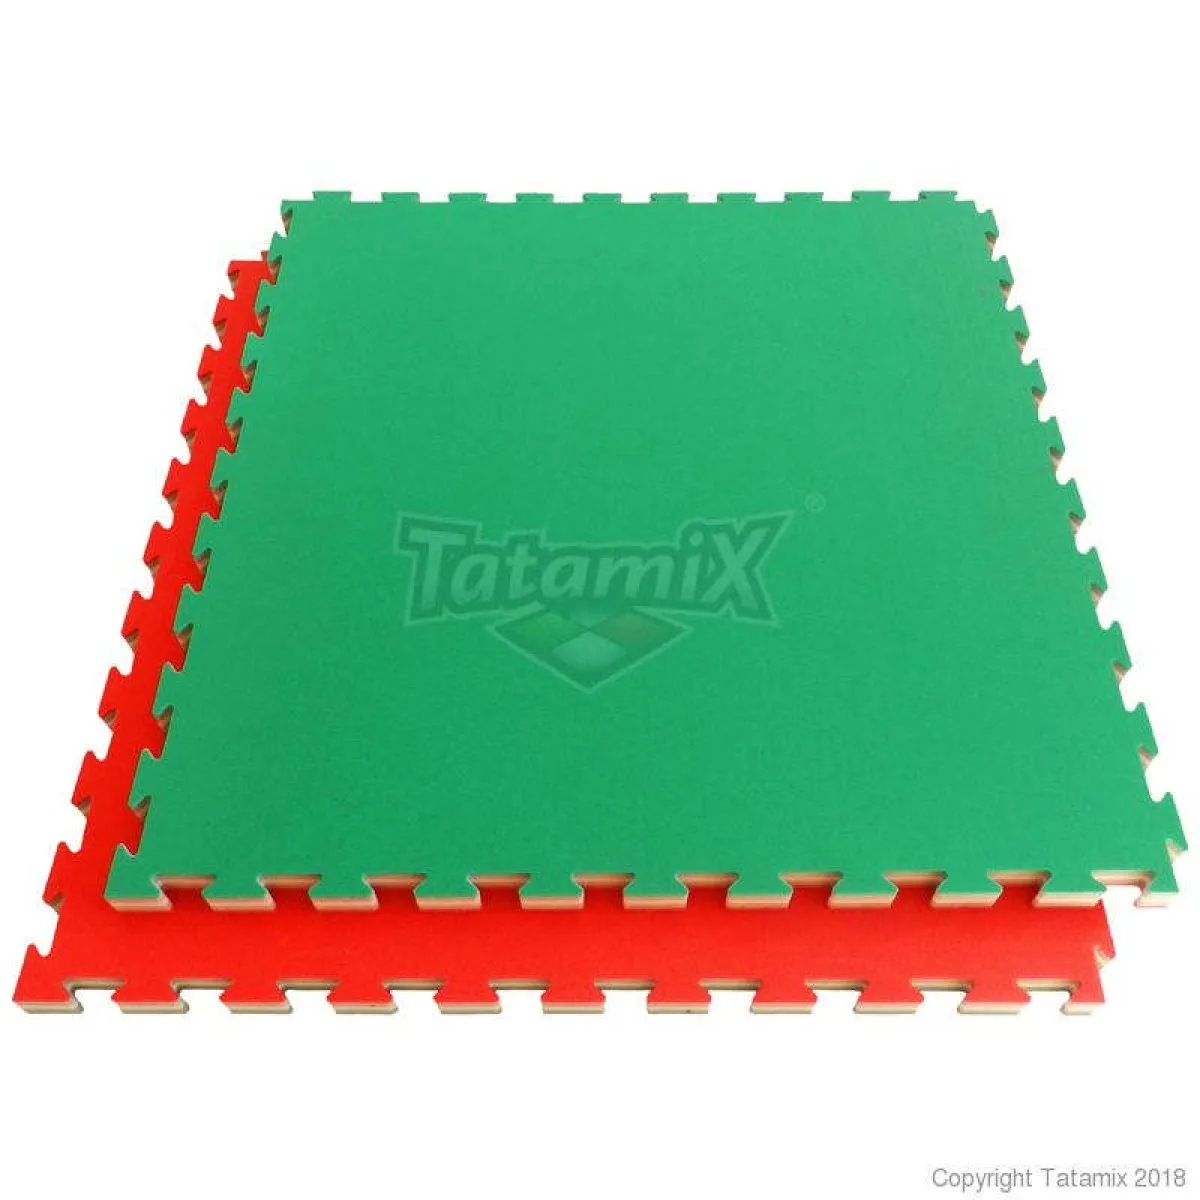 Tapete de judo para niños Tatami J40S rojo/gris/verde 100 cm x 100 cm x 4 cm